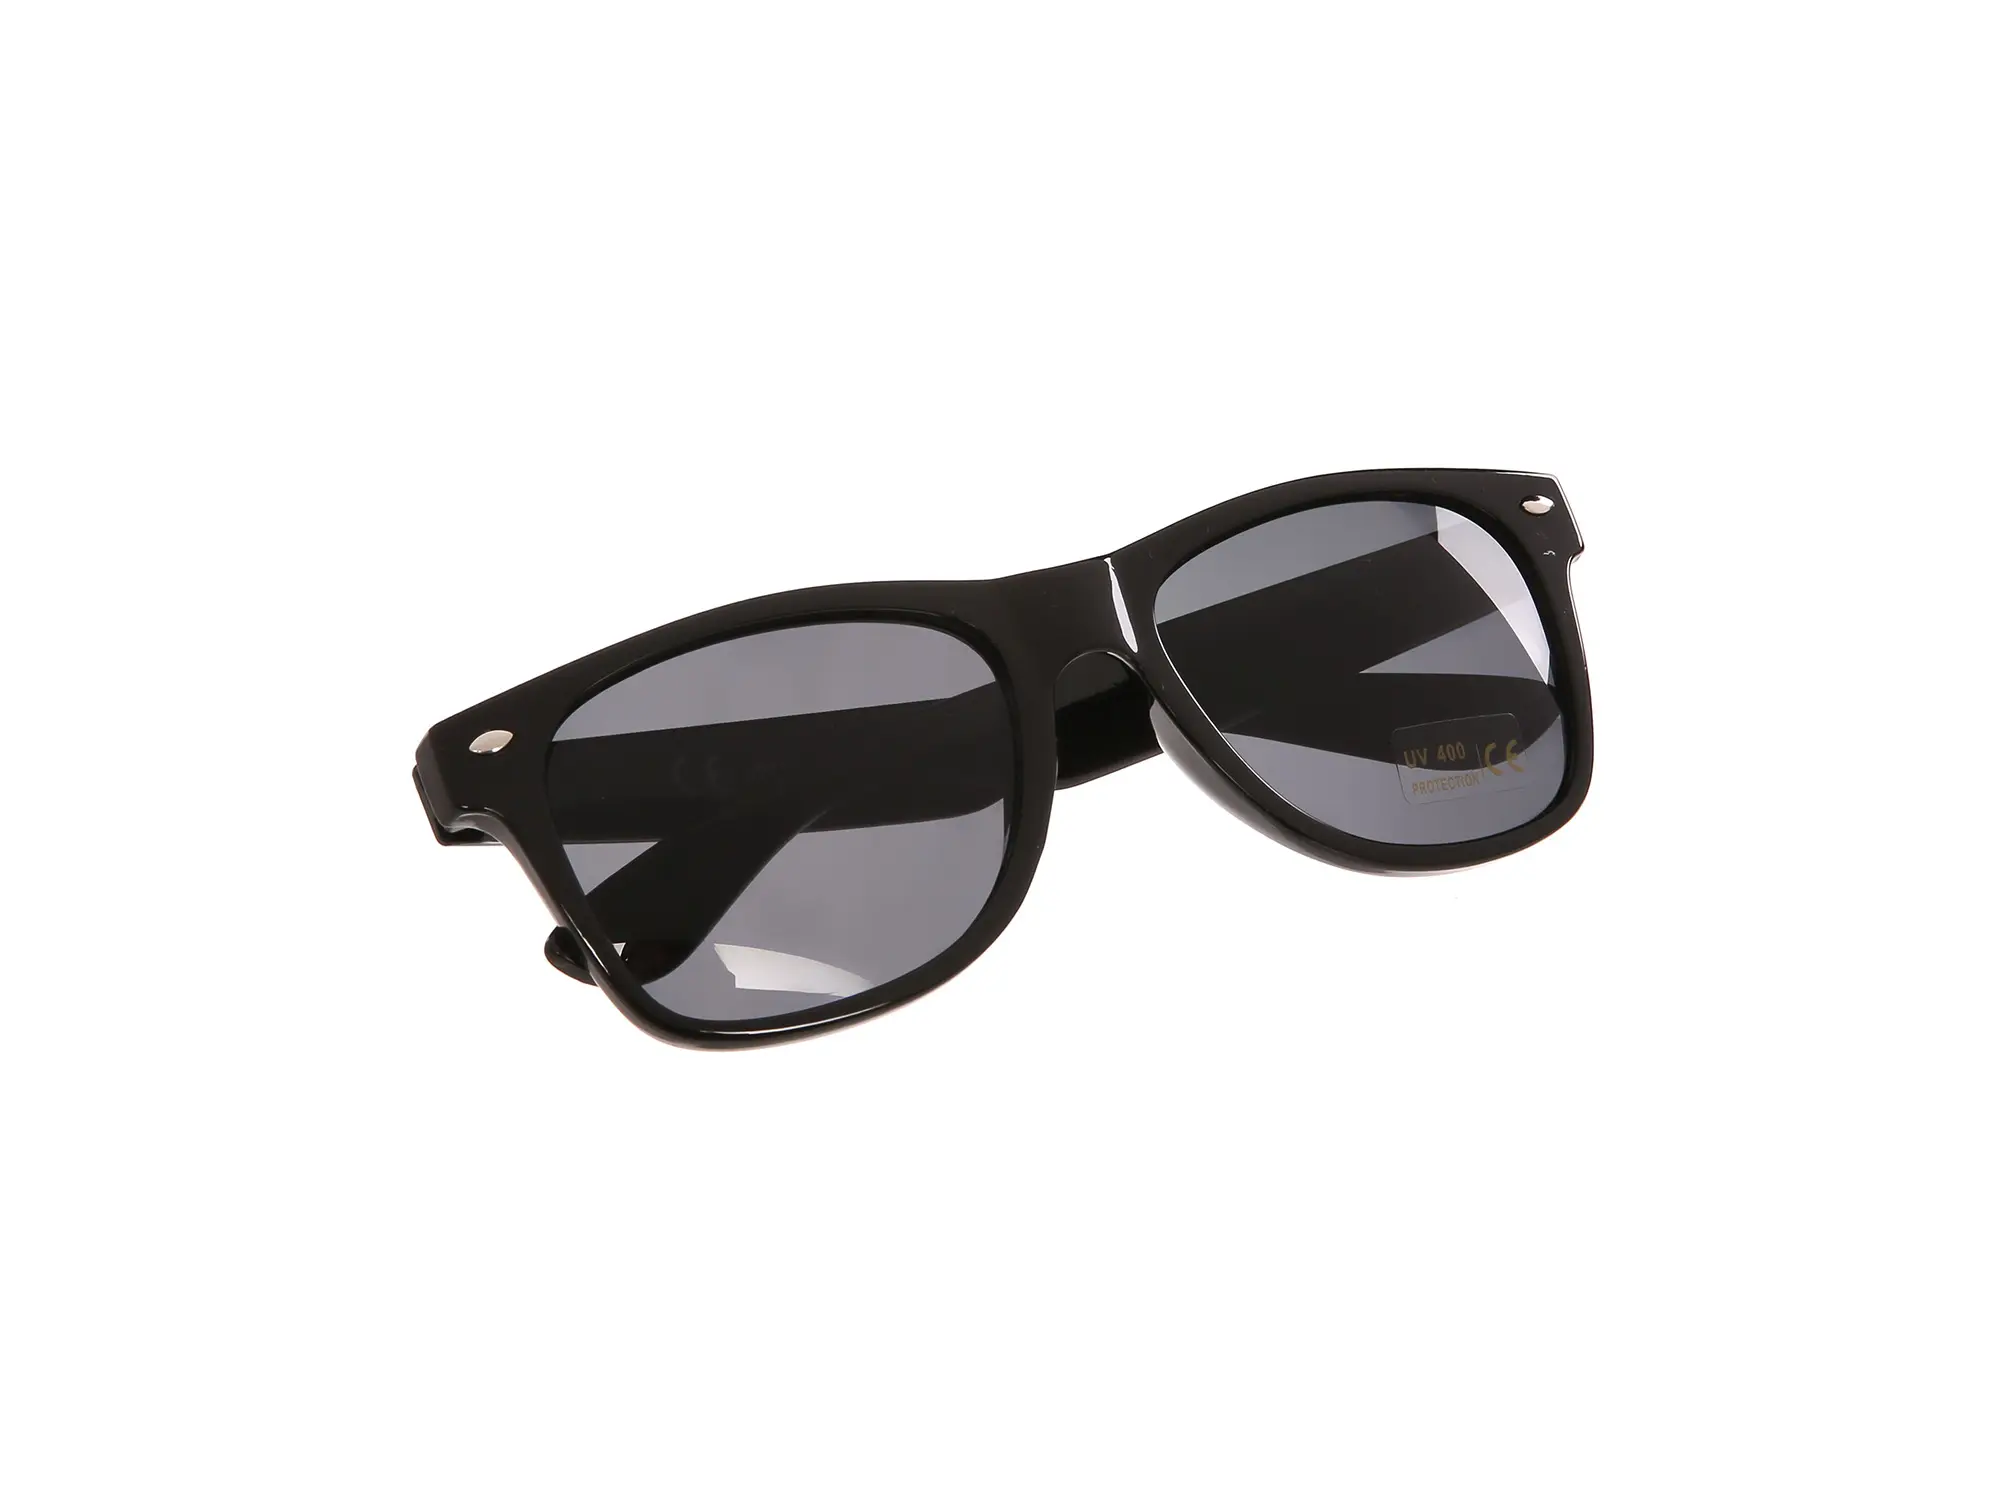 Sunglasses with SIMSON/MZA Logo - Black / Smoke Gray, Item no: 10066296 - Image 1